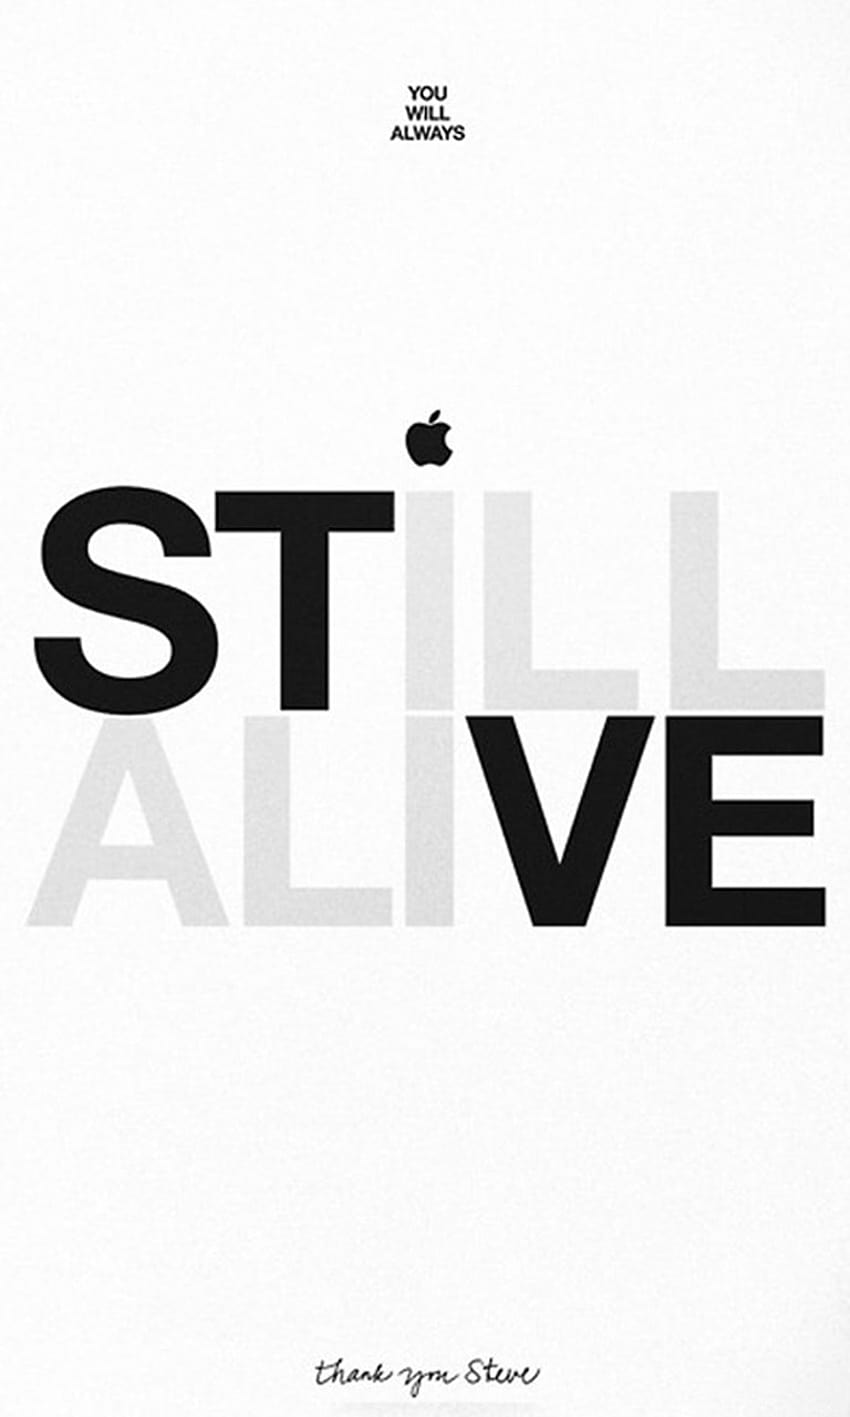 Steve Jobs Wallpaper for iPhone by QuoteSteveJobs on DeviantArt